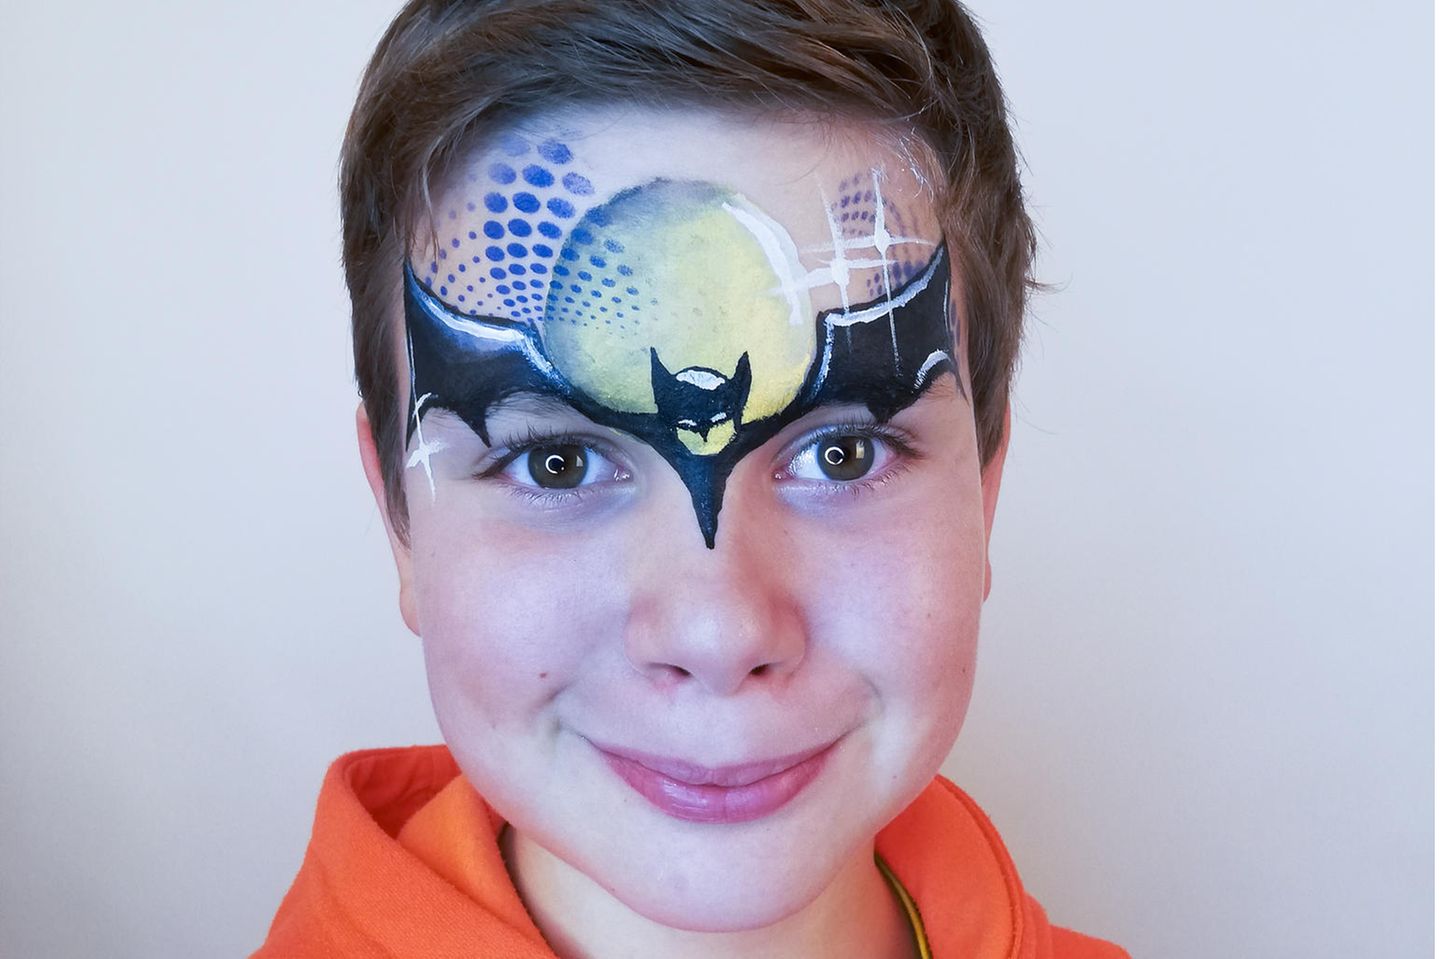 Civic thuis speling Batman schminken: So wirst du zum Superhelden | Eltern.de